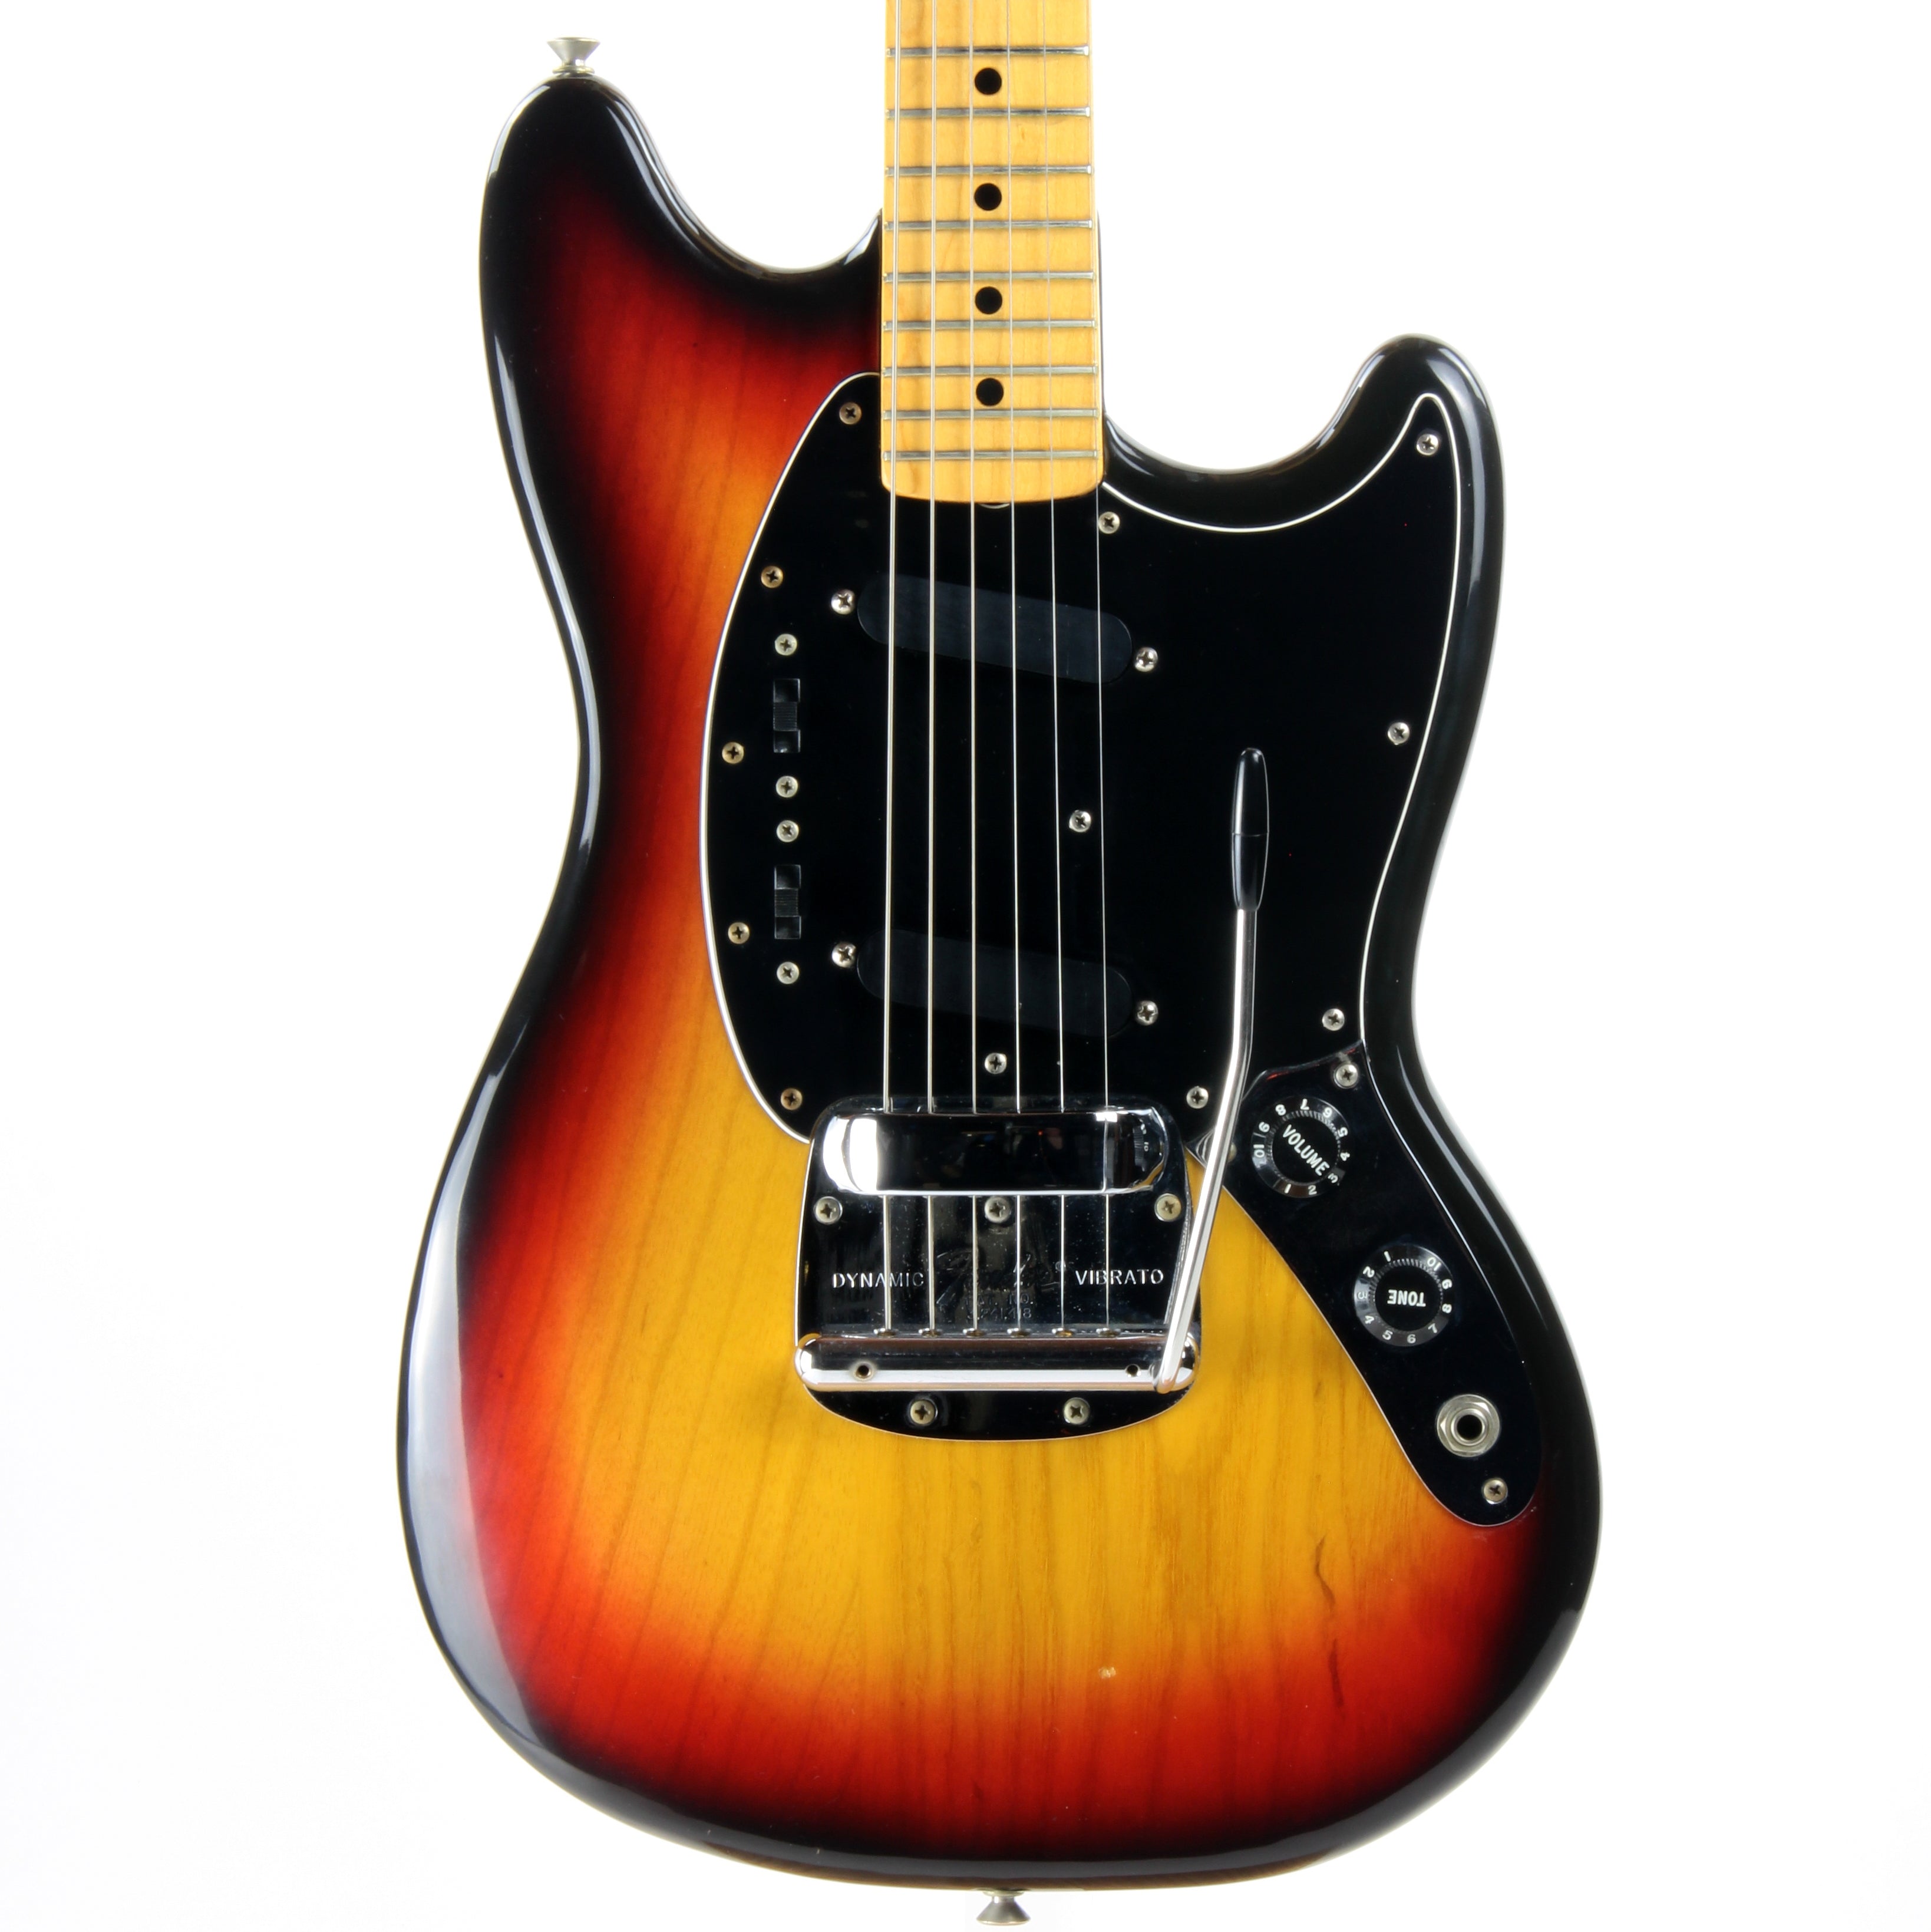 *SOLD*  1976 Fender MUSTANG w/ Original Case, Tags - Sunburst Maple Neck Vintage 24